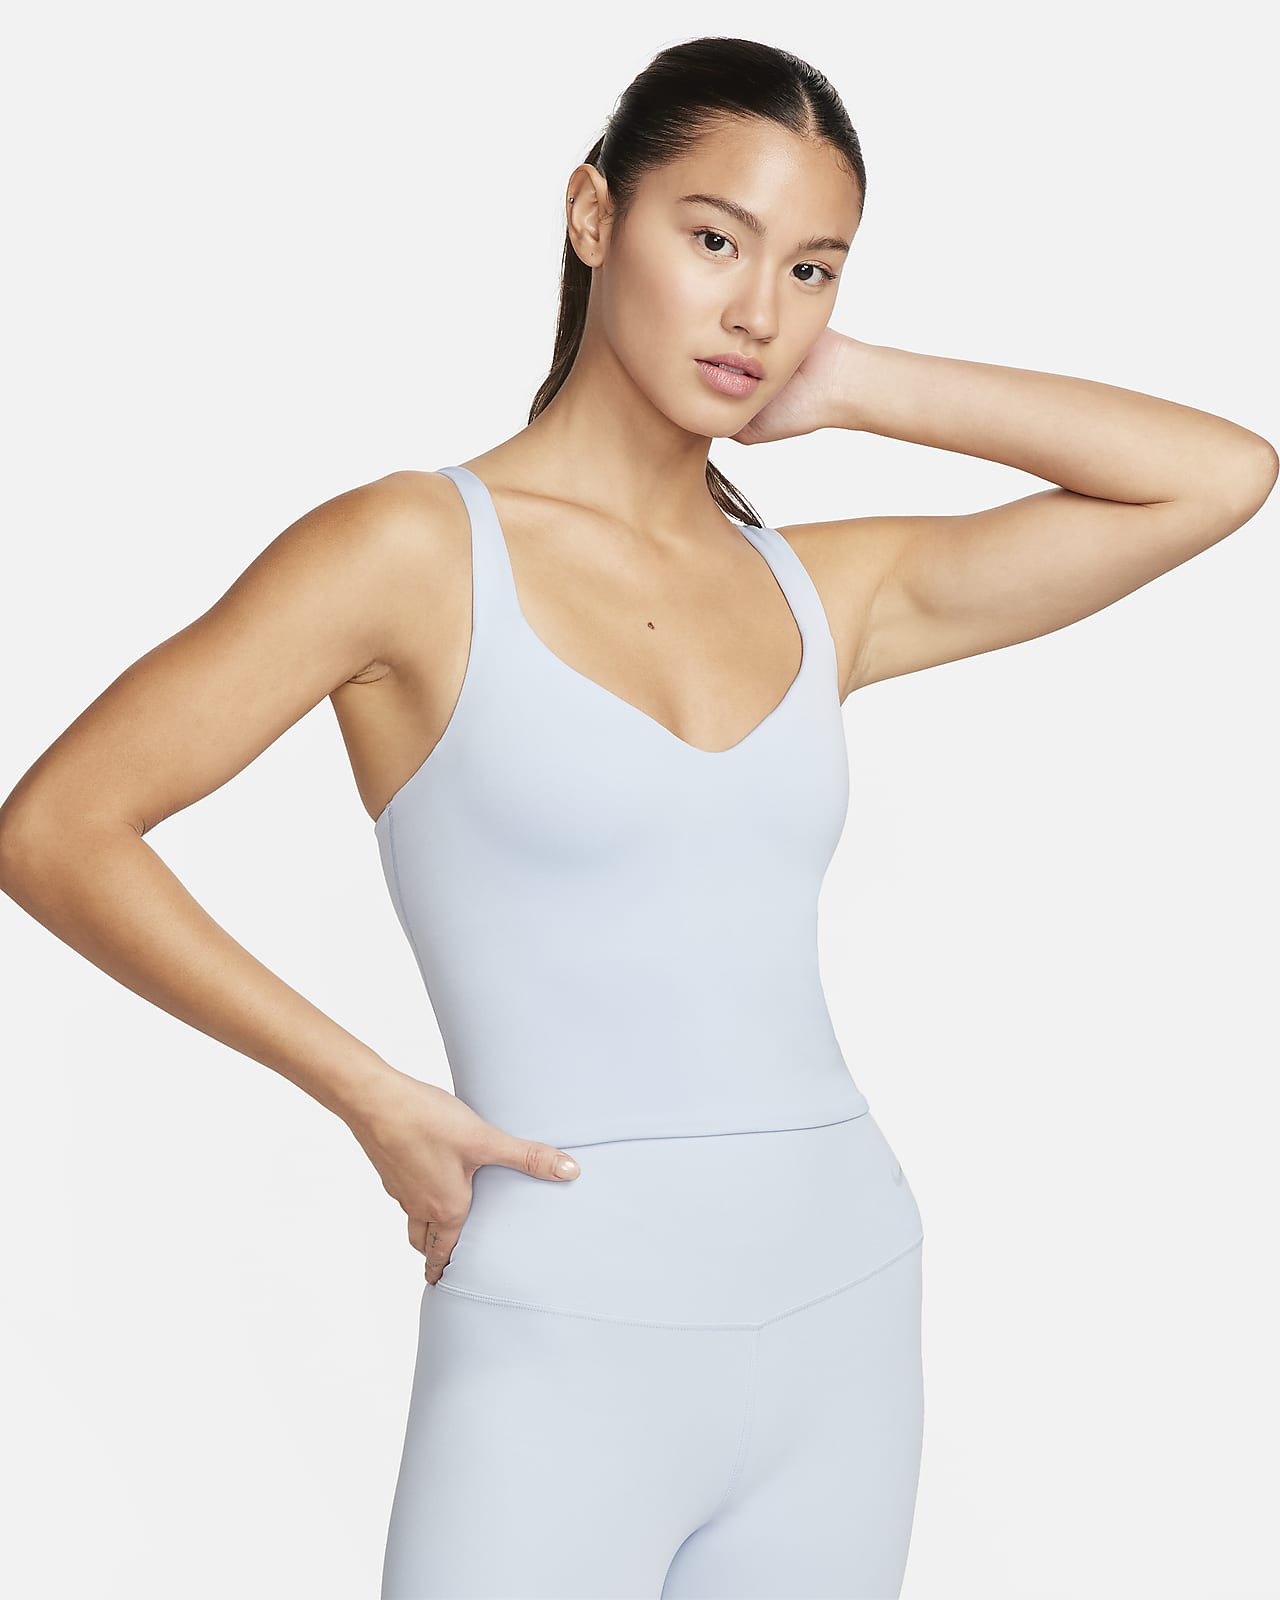 Nike Alate 女款輕度支撐型襯墊運動內衣式背心上衣